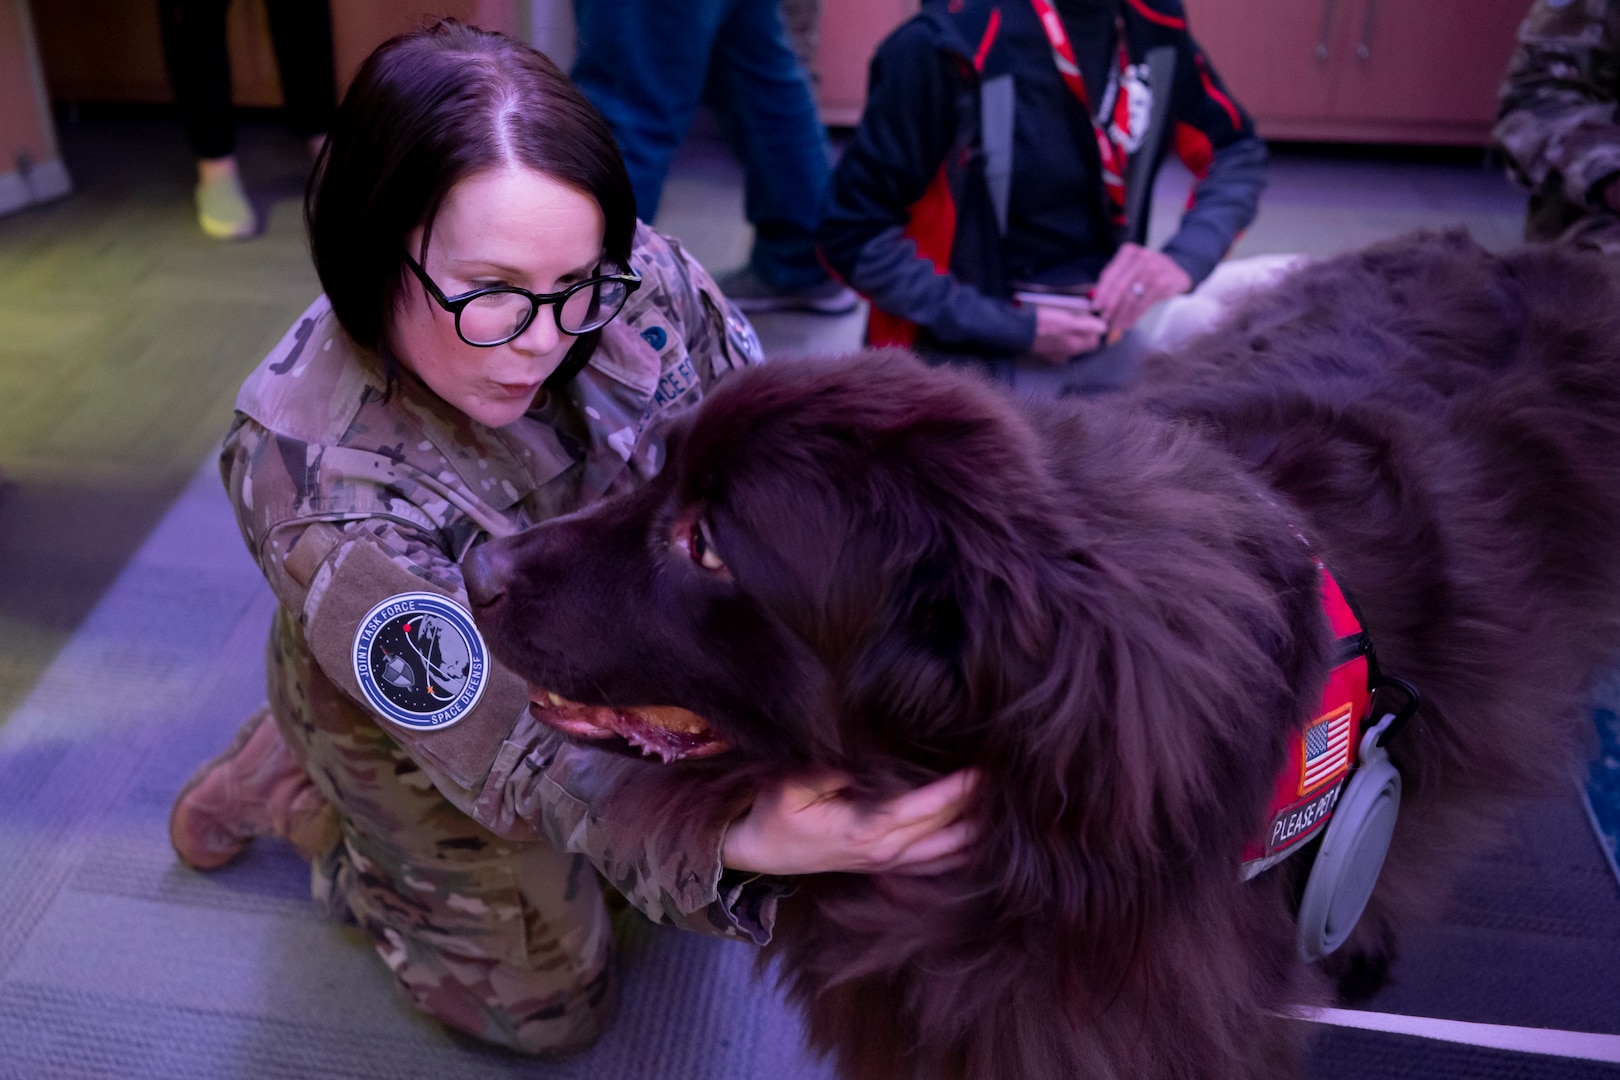 Woman in uniform pets dog